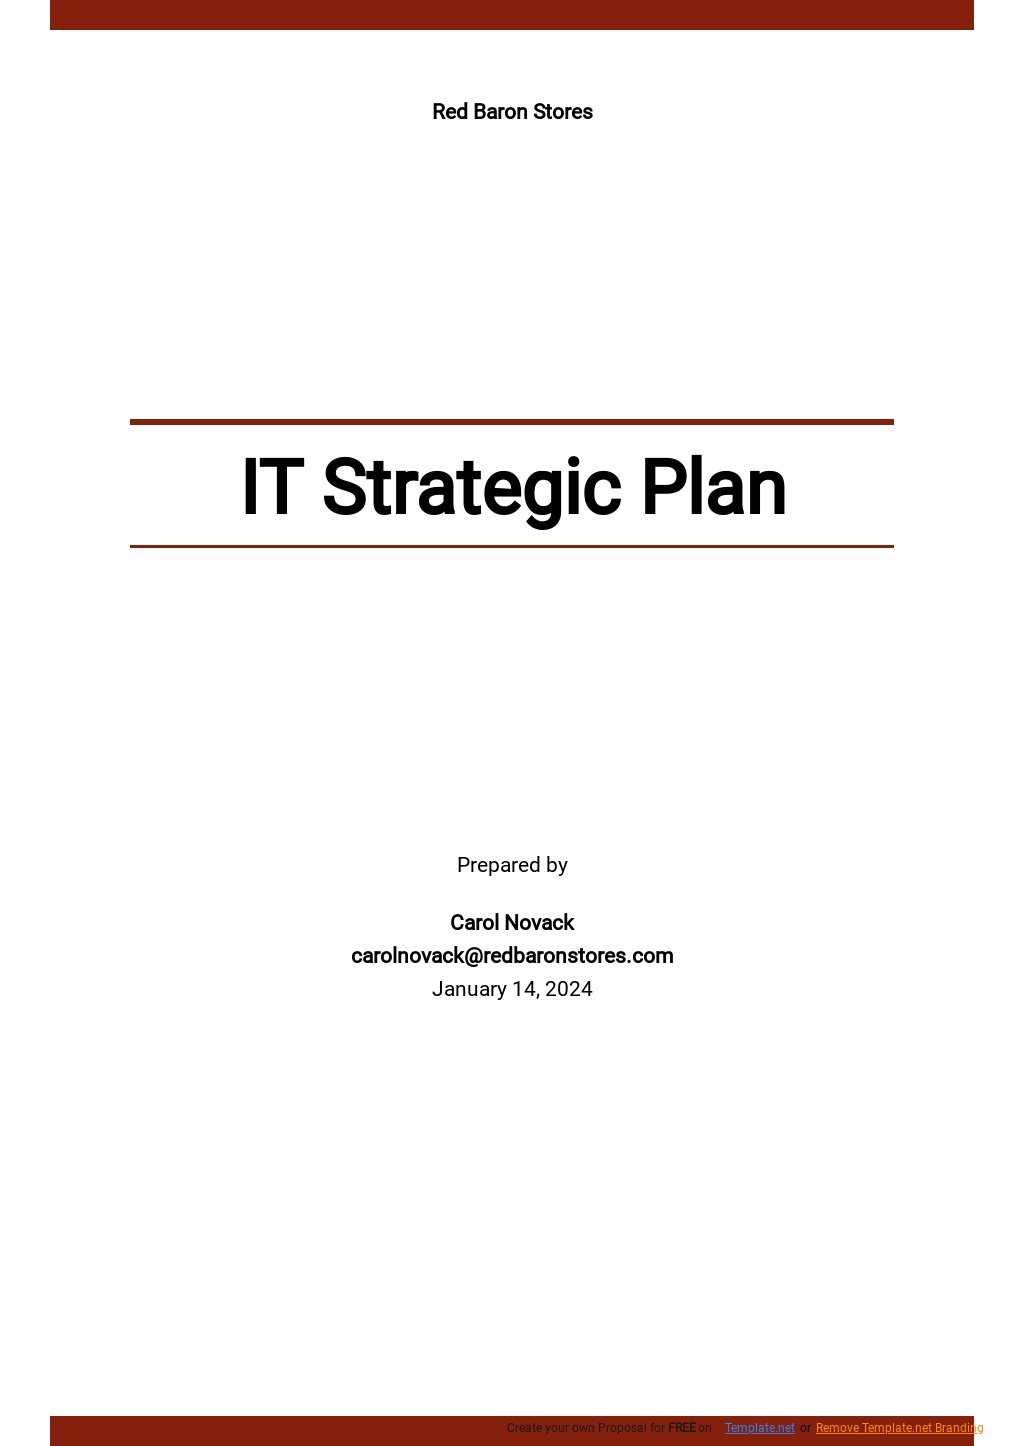 Sample IT Strategic Plan Template.jpe